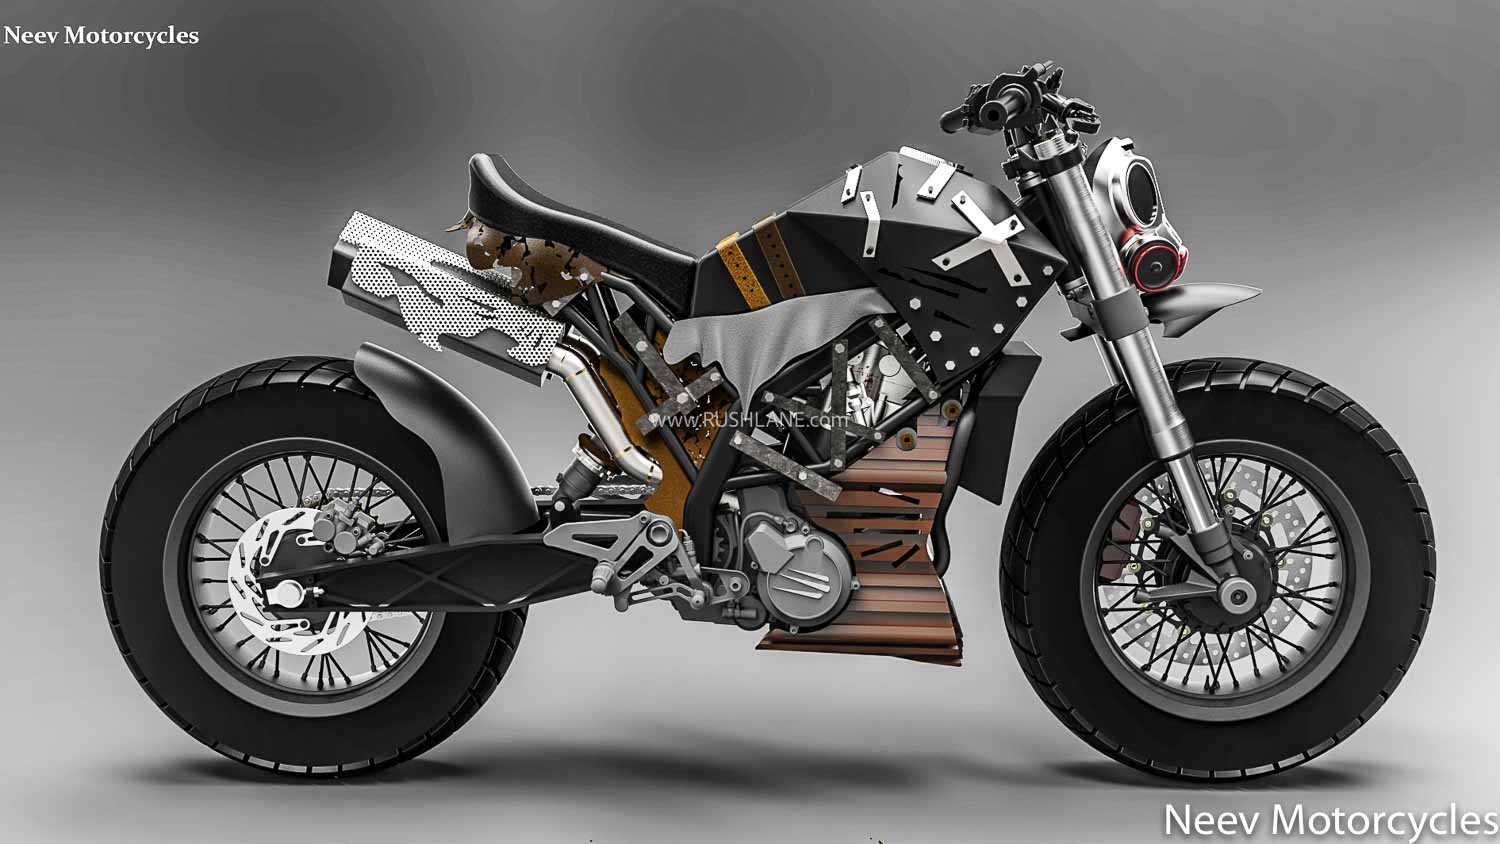 KTM Duke 200 Modified by Neev Motorcycles